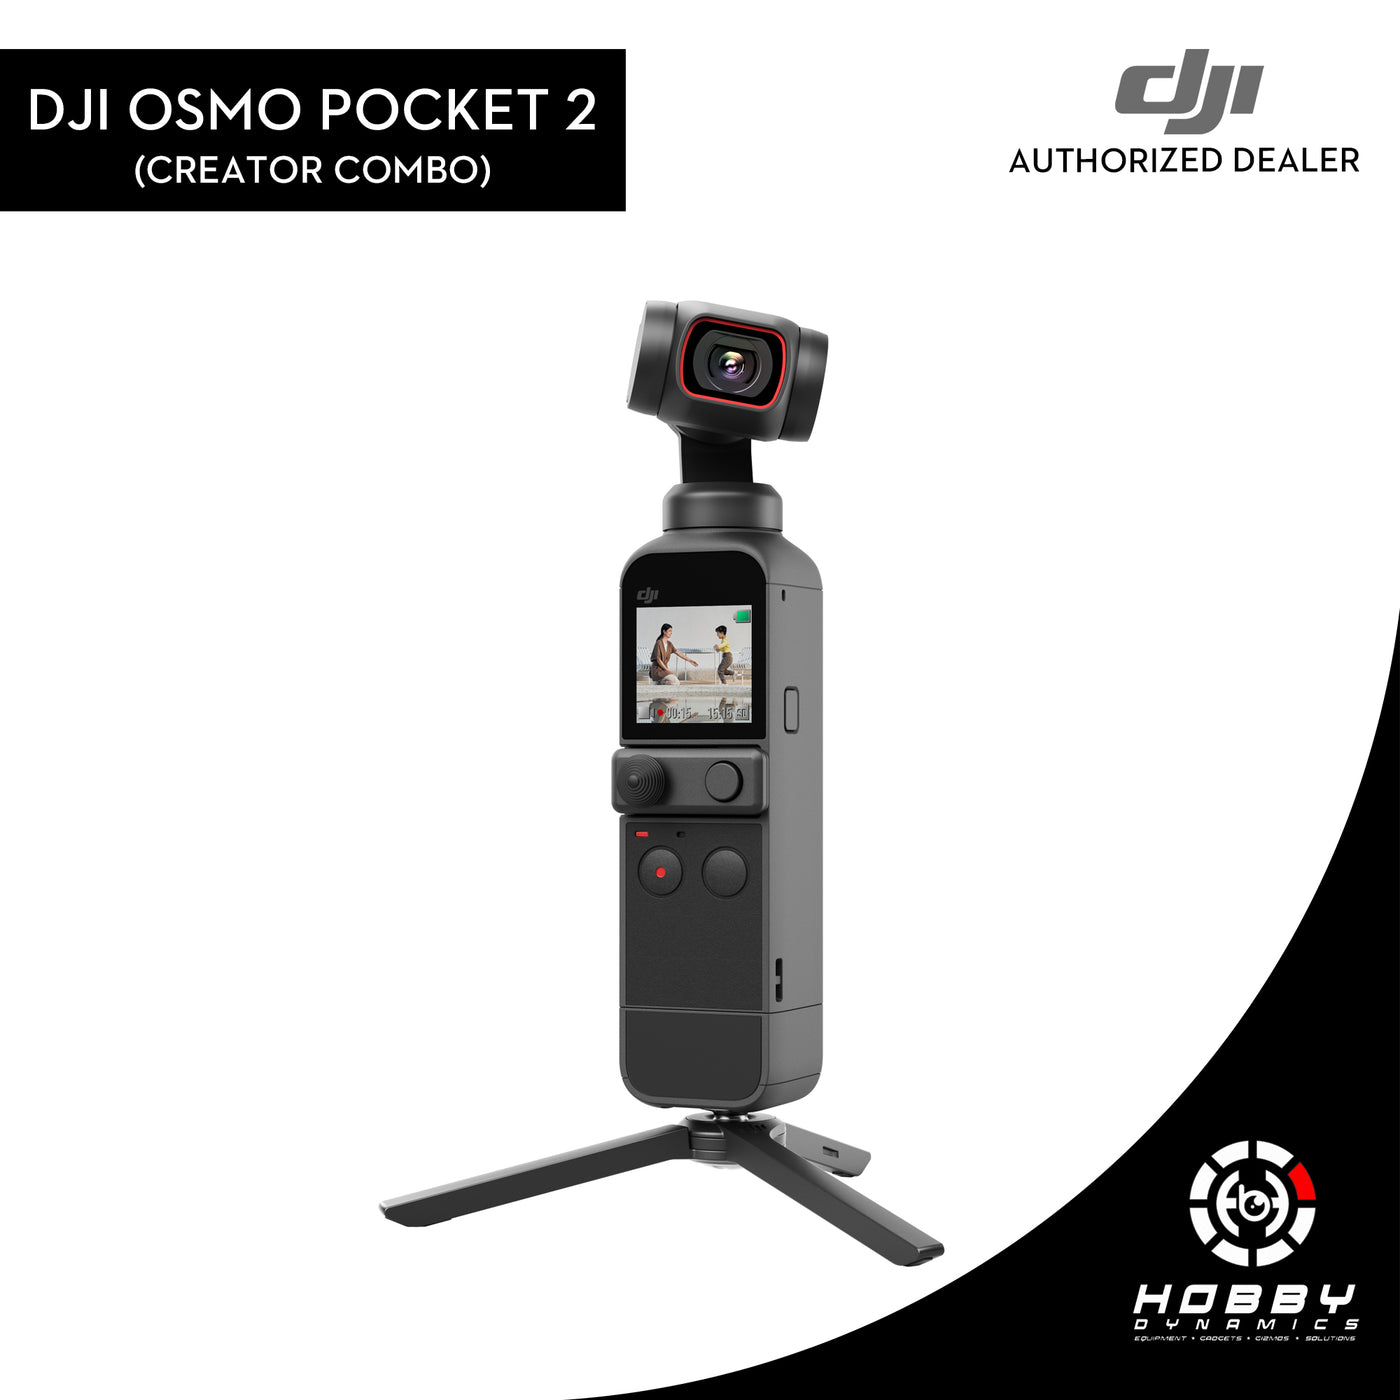 2 Pocket DJI - 4